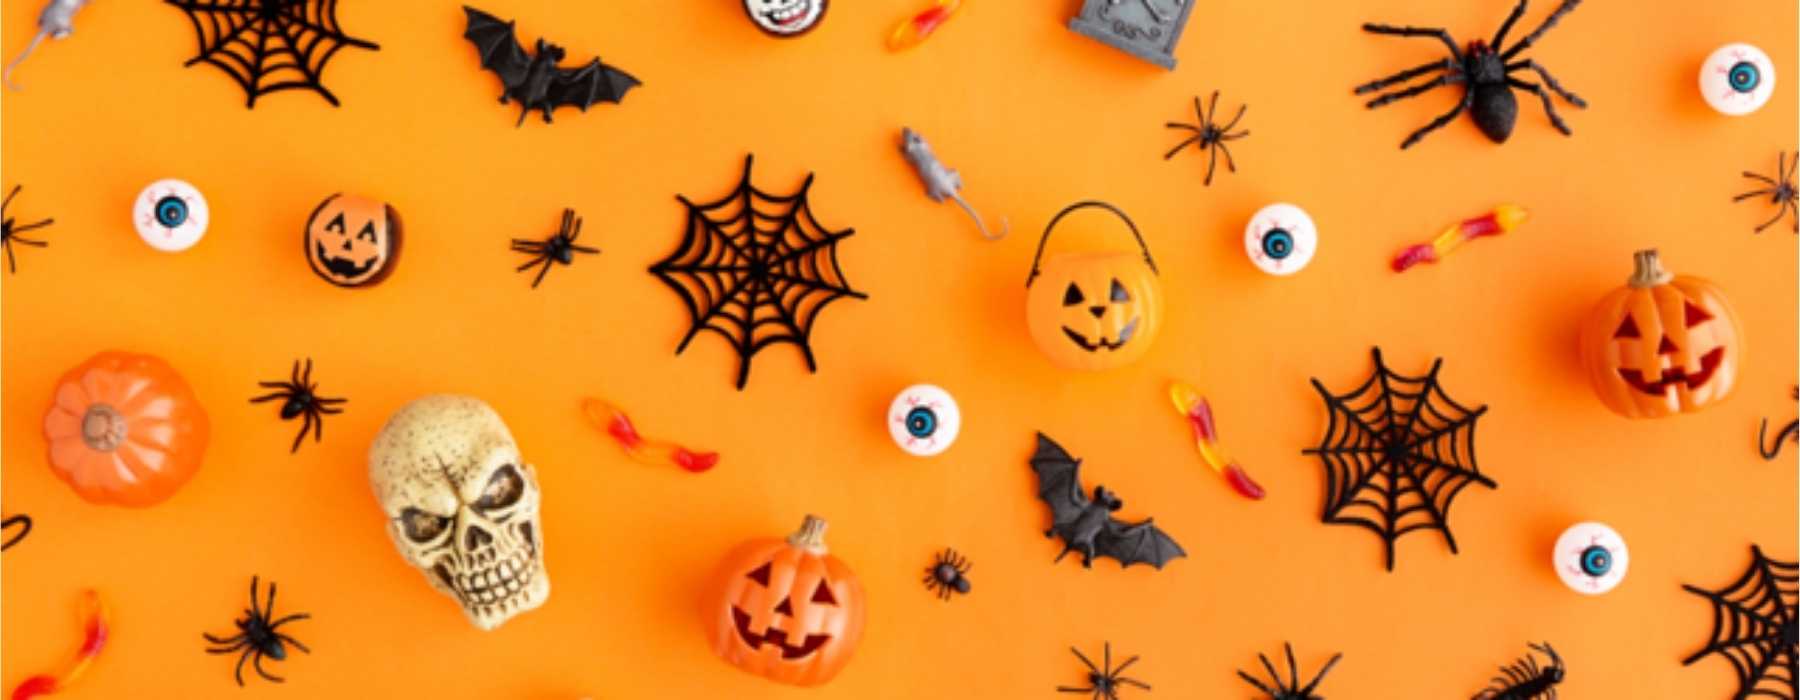 25 Non-Candy Halloween Treats Kids Will Love